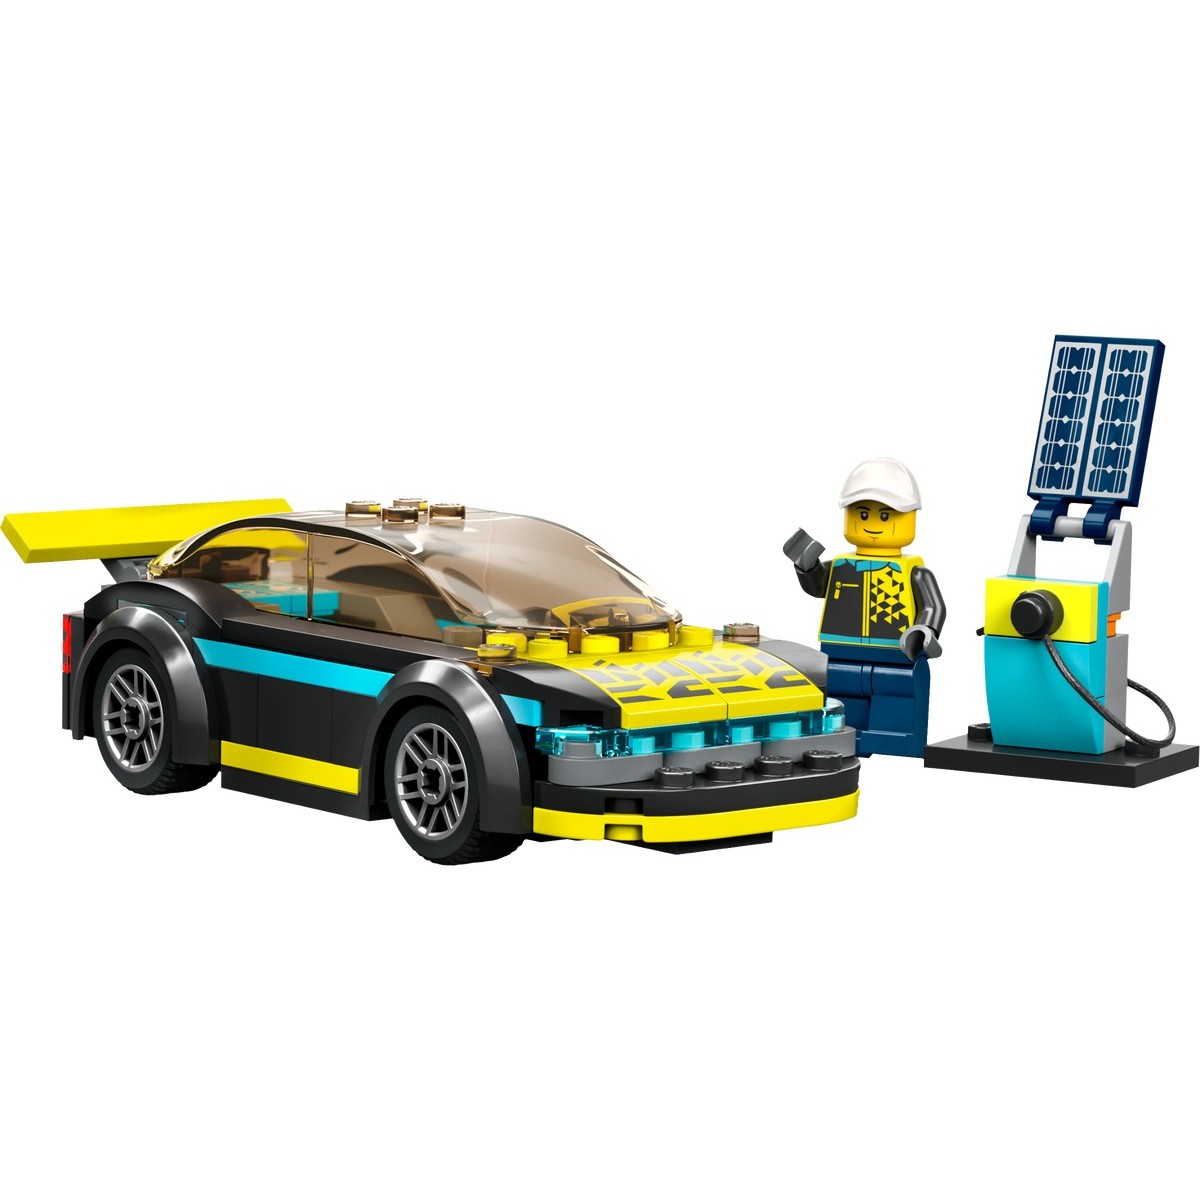 LEGO CITY ELEKTRICKE SPORTOVE AUTO /60383/